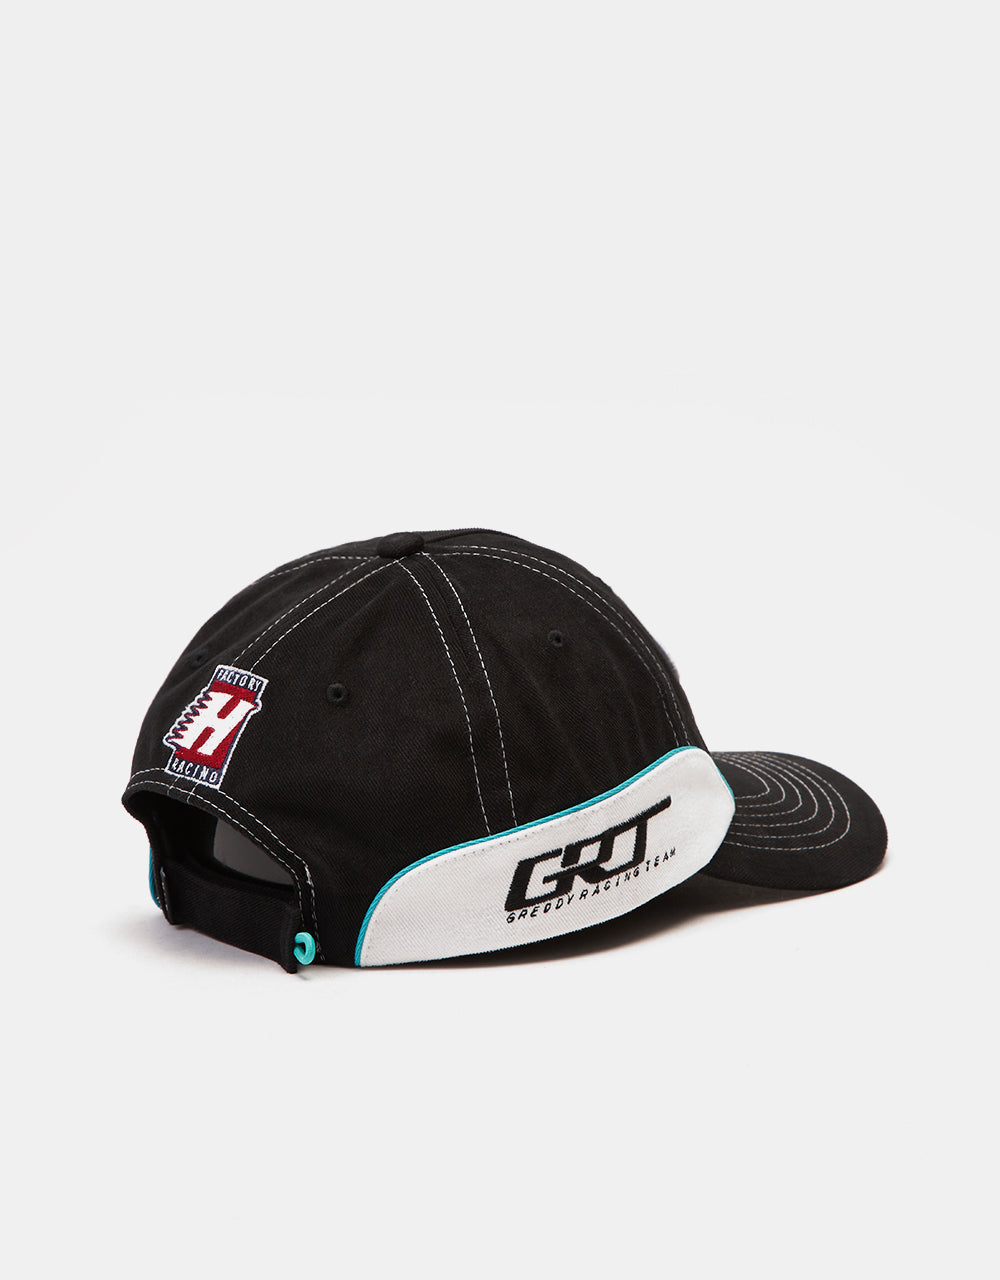 HUF x Greddy Racing Team Hat - Black